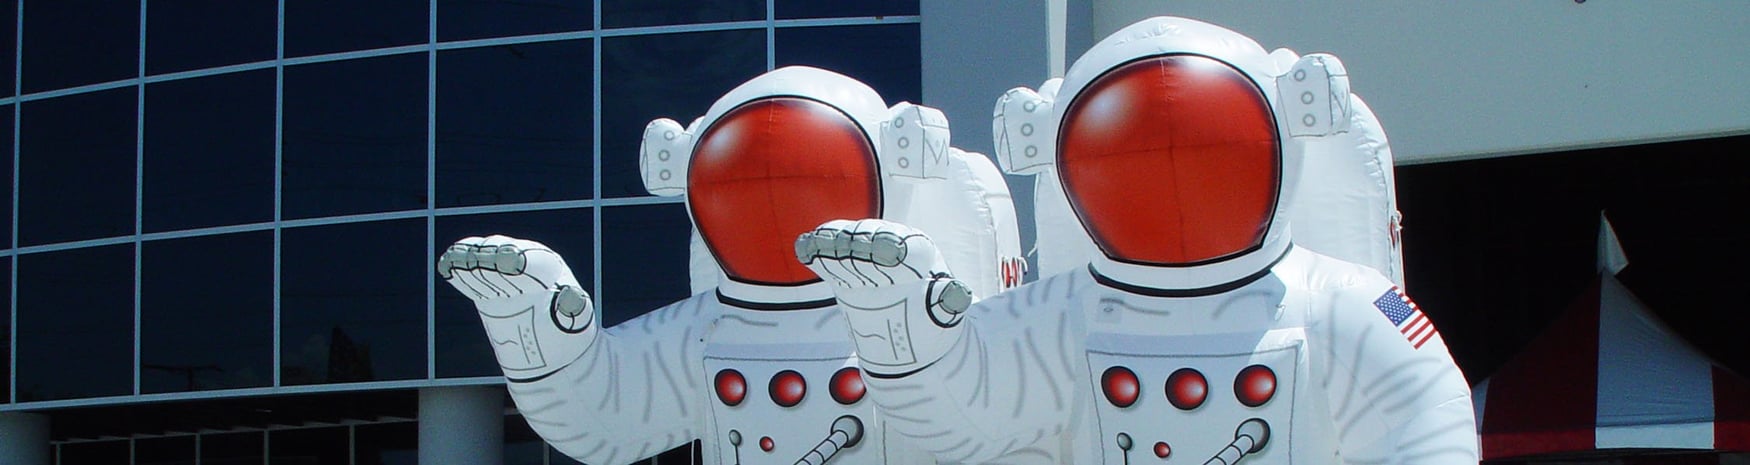 inflatable-astronaut-header.jpg